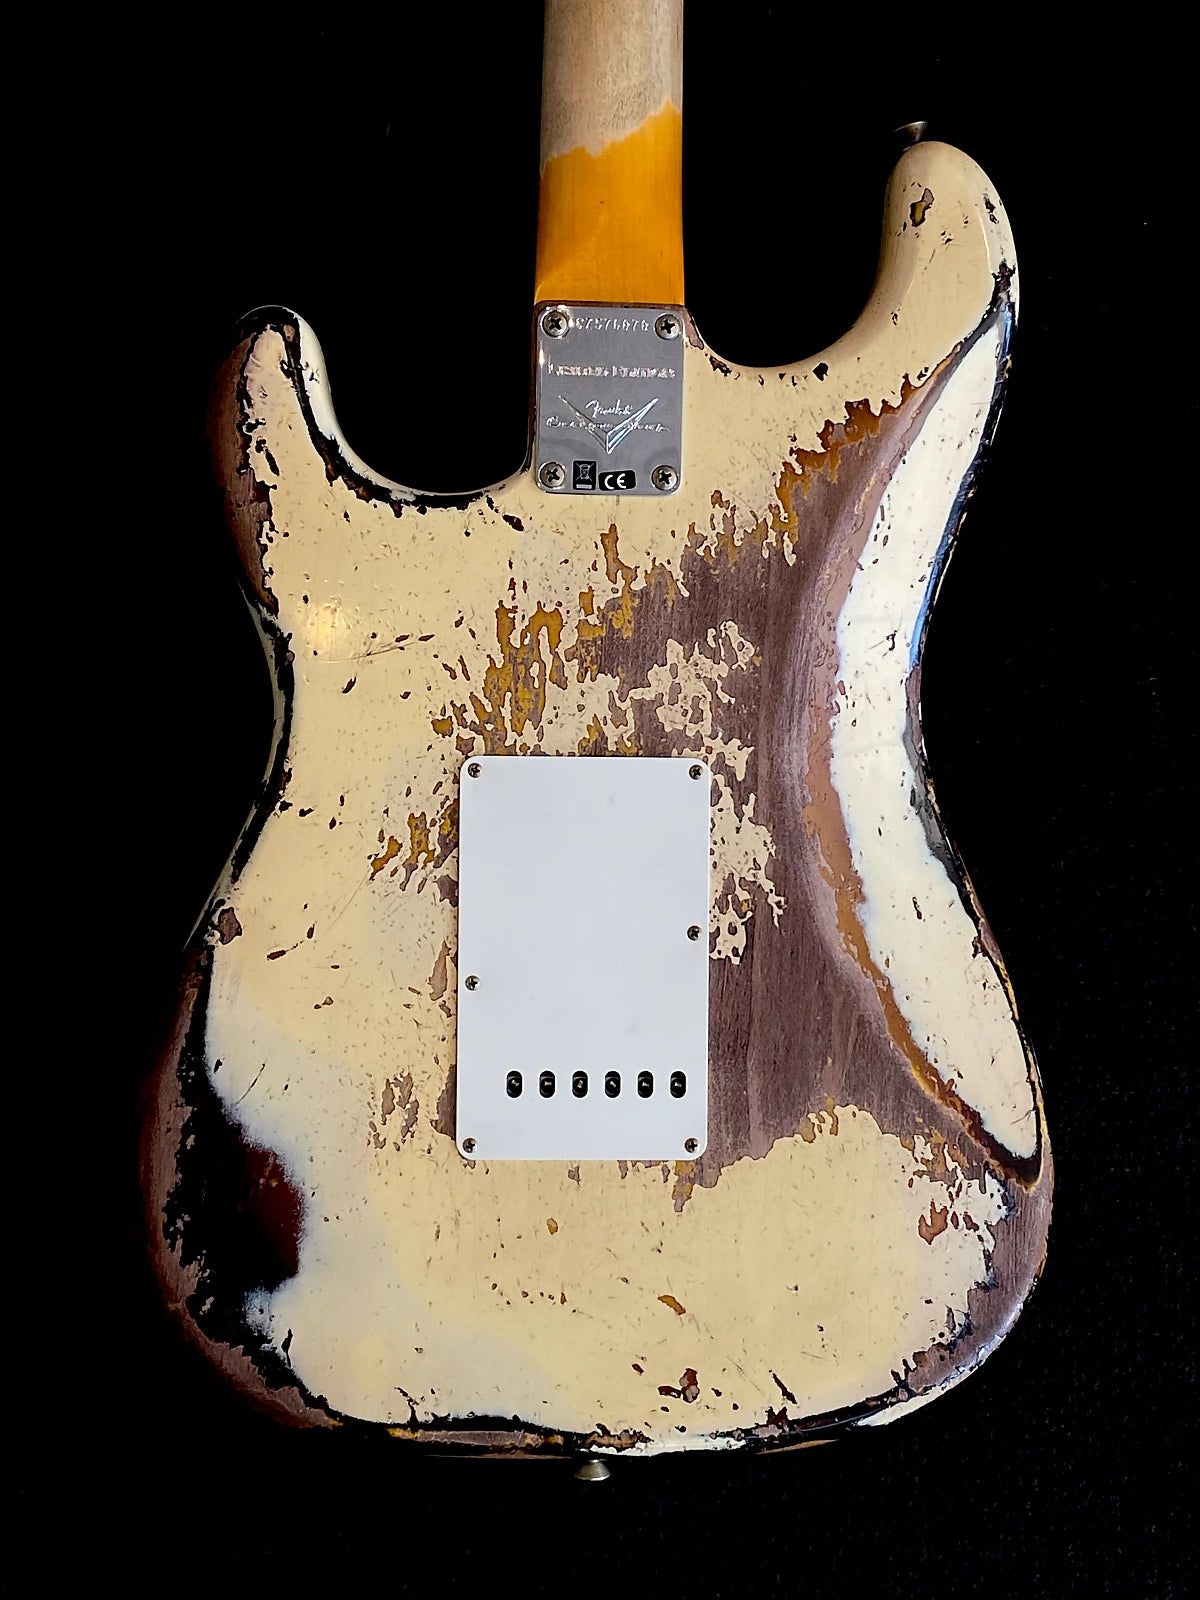 Fender Custom Shop LTD 59 Stratocaster Super Heavy Relic - Vintage White / 3 Tone Sunburst